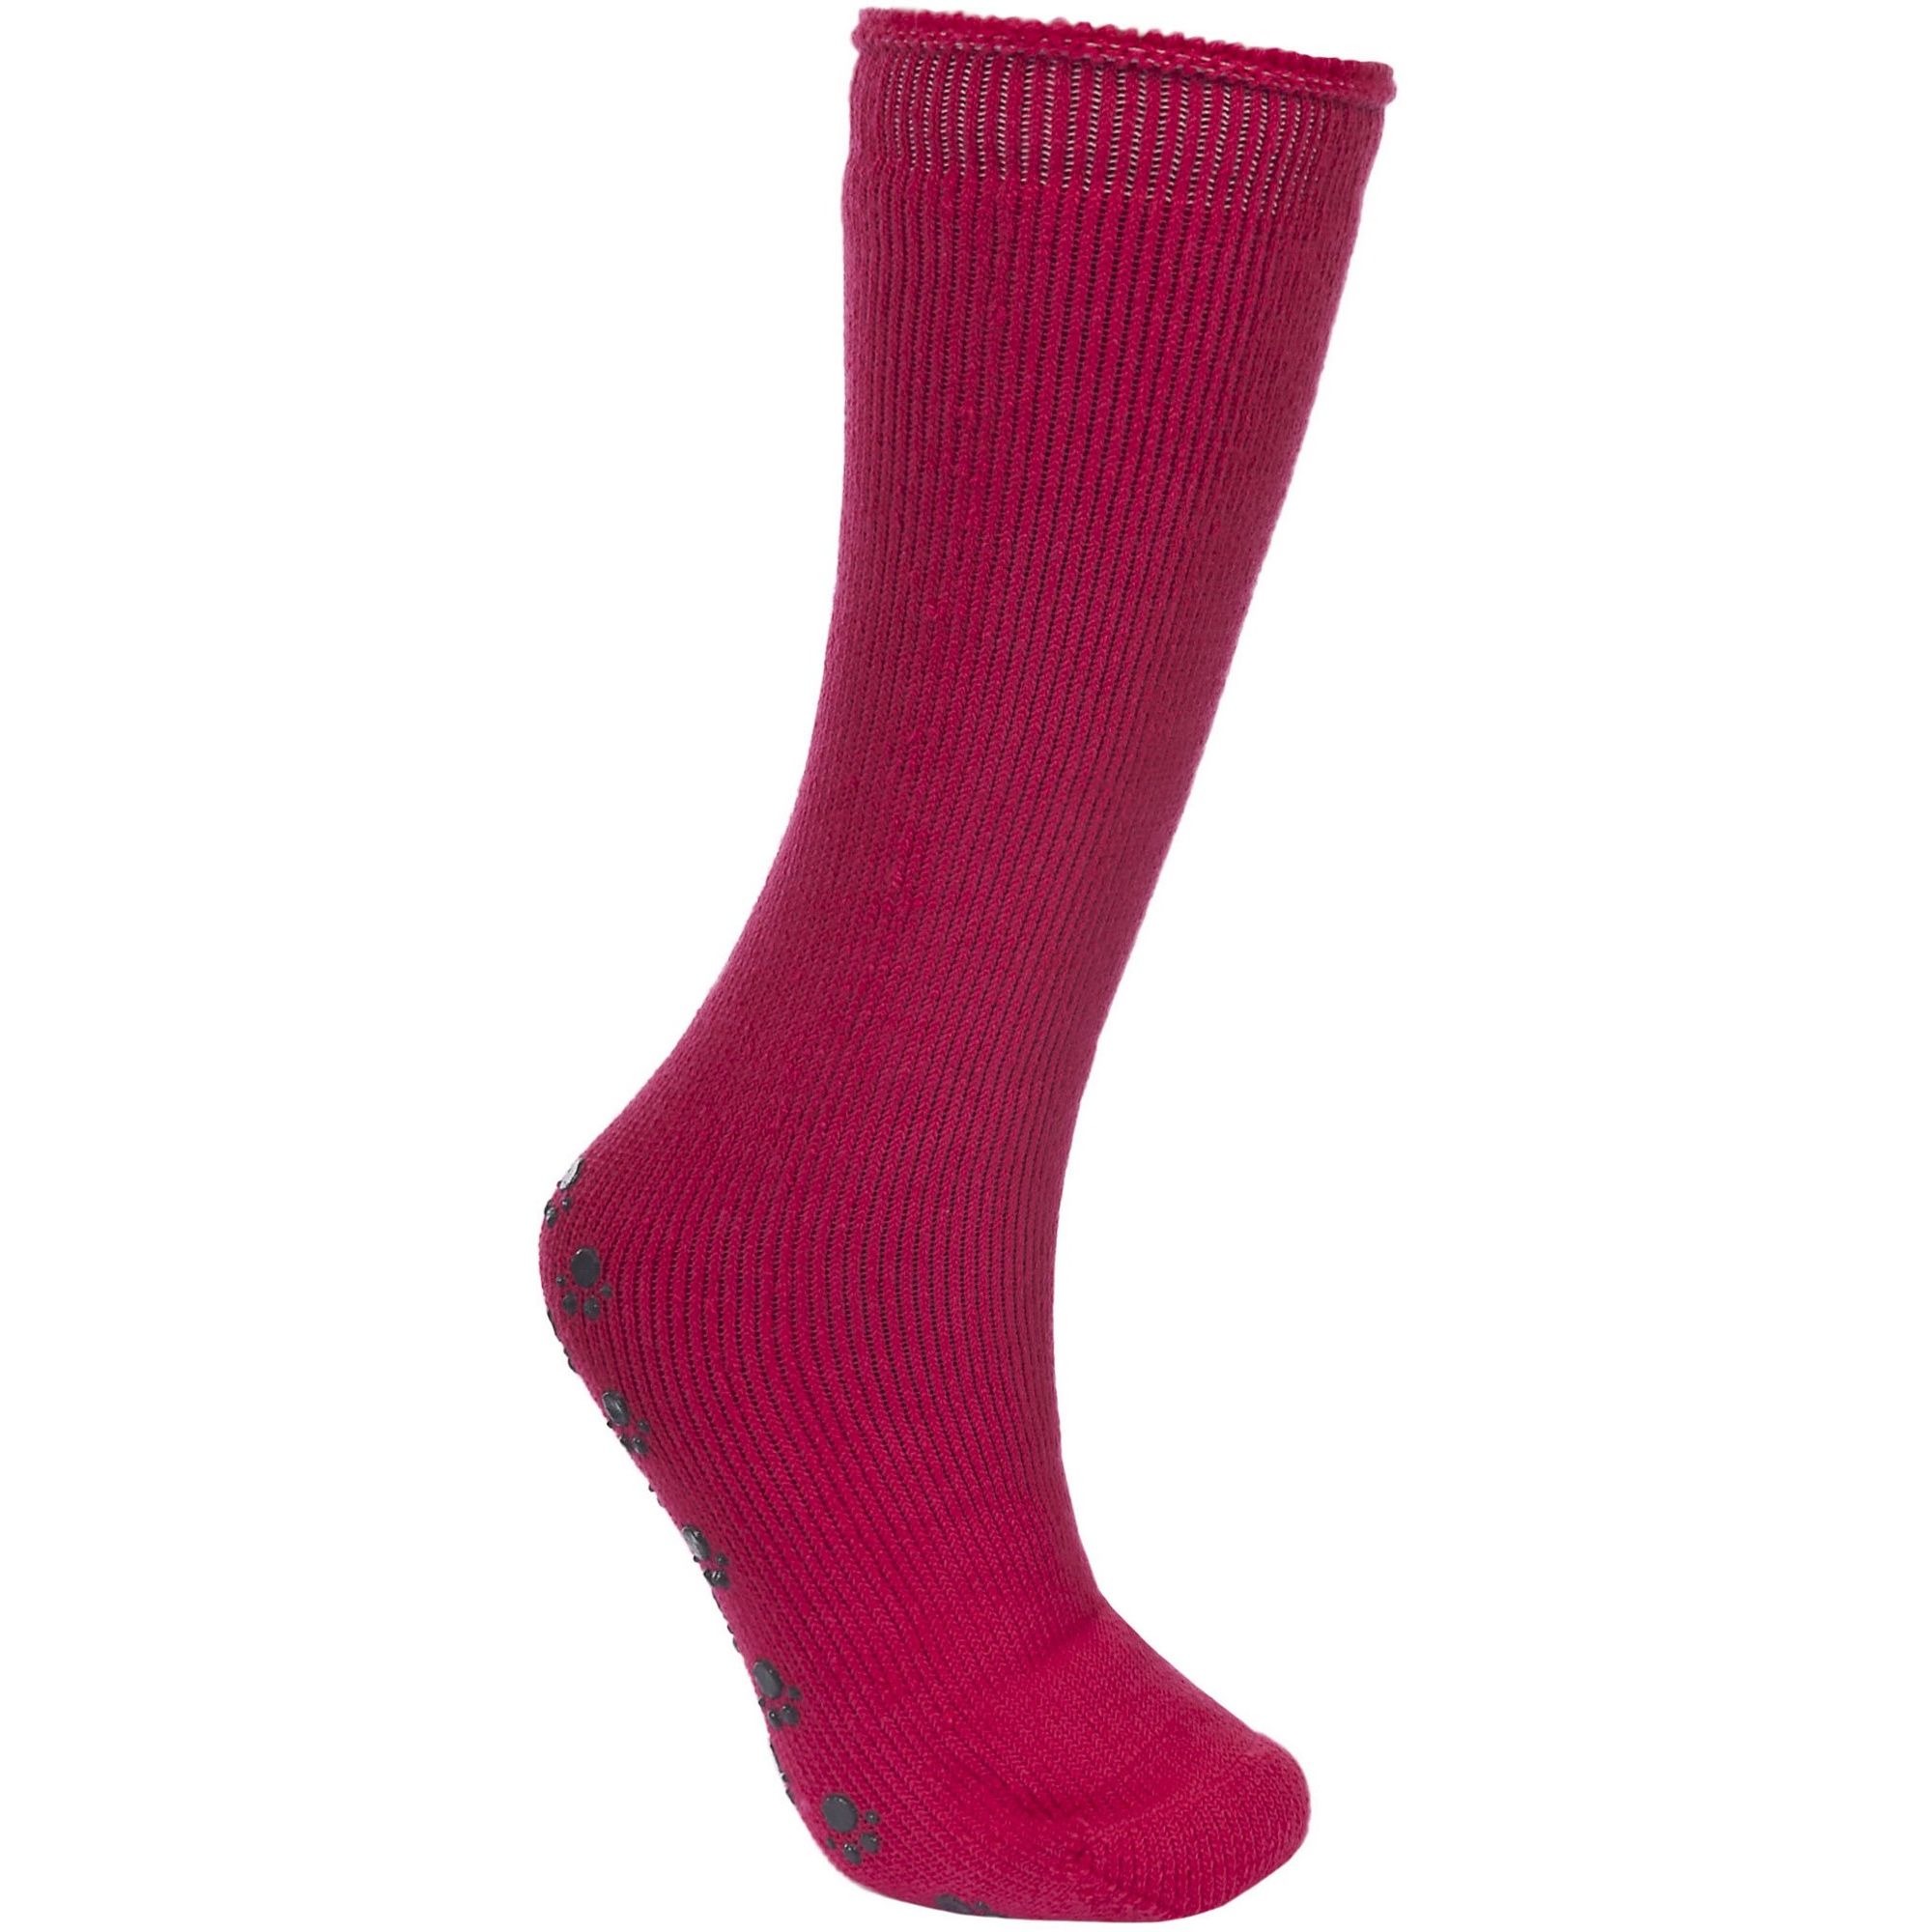 Childrens thermal ski tube socks. Ultra thick. Stick grip sole. 91% Acrylic, 5% Polyamide, 3% Polyester, 1% Elastane. Machine washable.